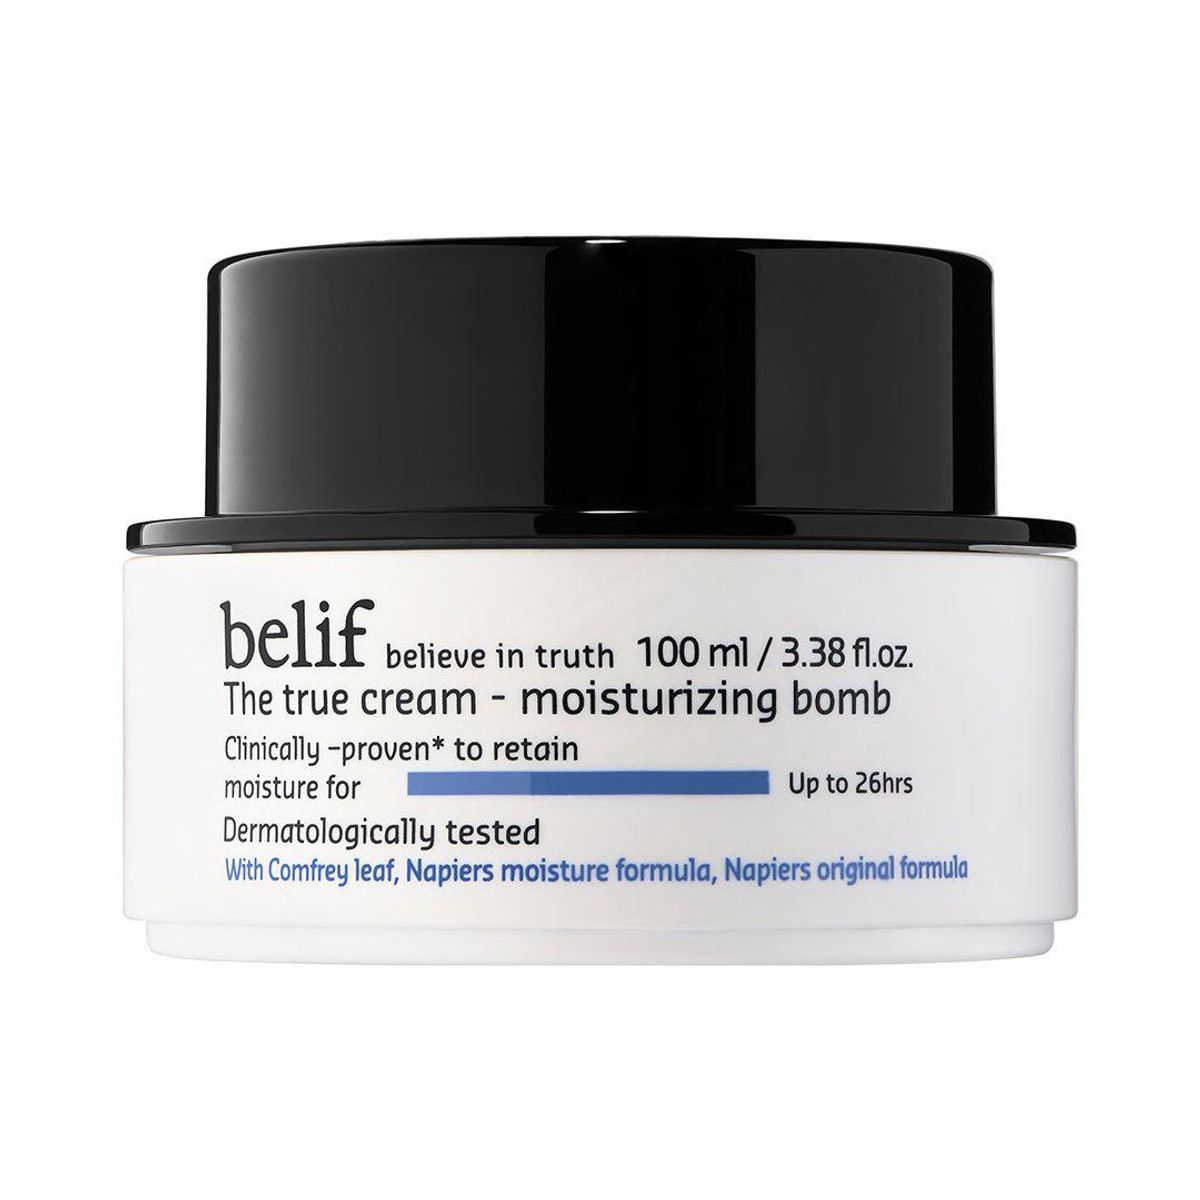 belif the true cream moisturizing bomb